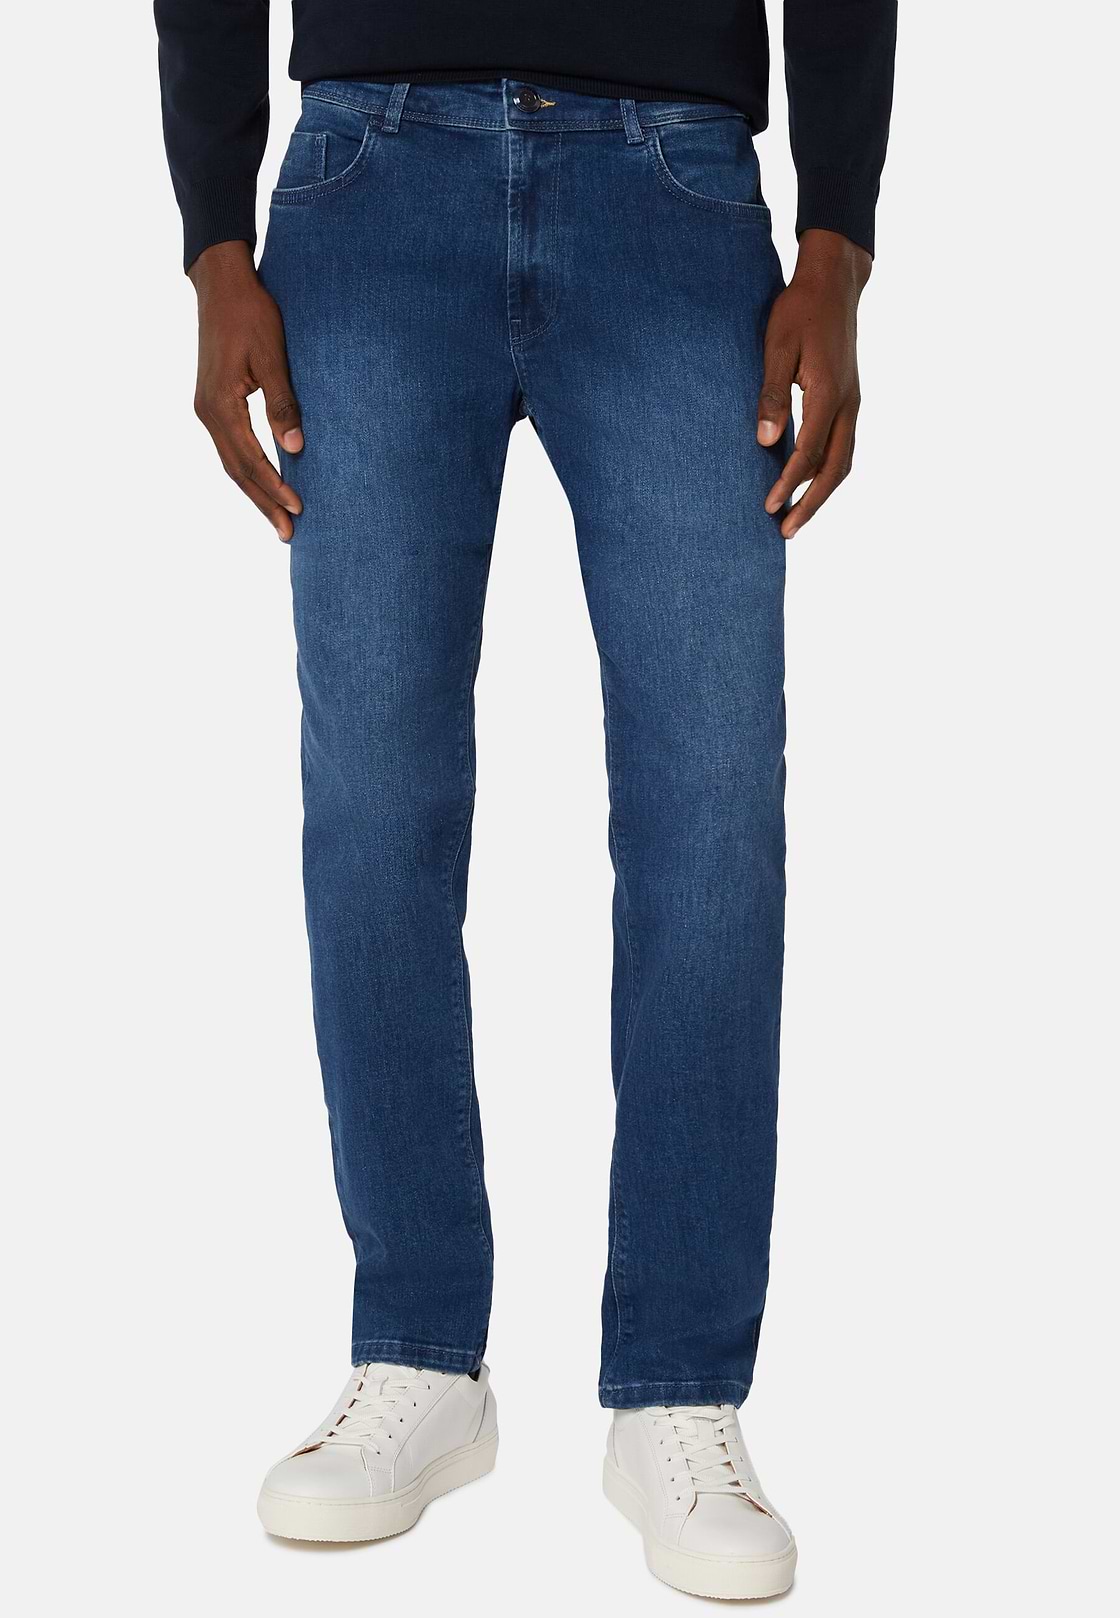 Medium Blue Stretch Denim Jeans, Indigo, hi-res